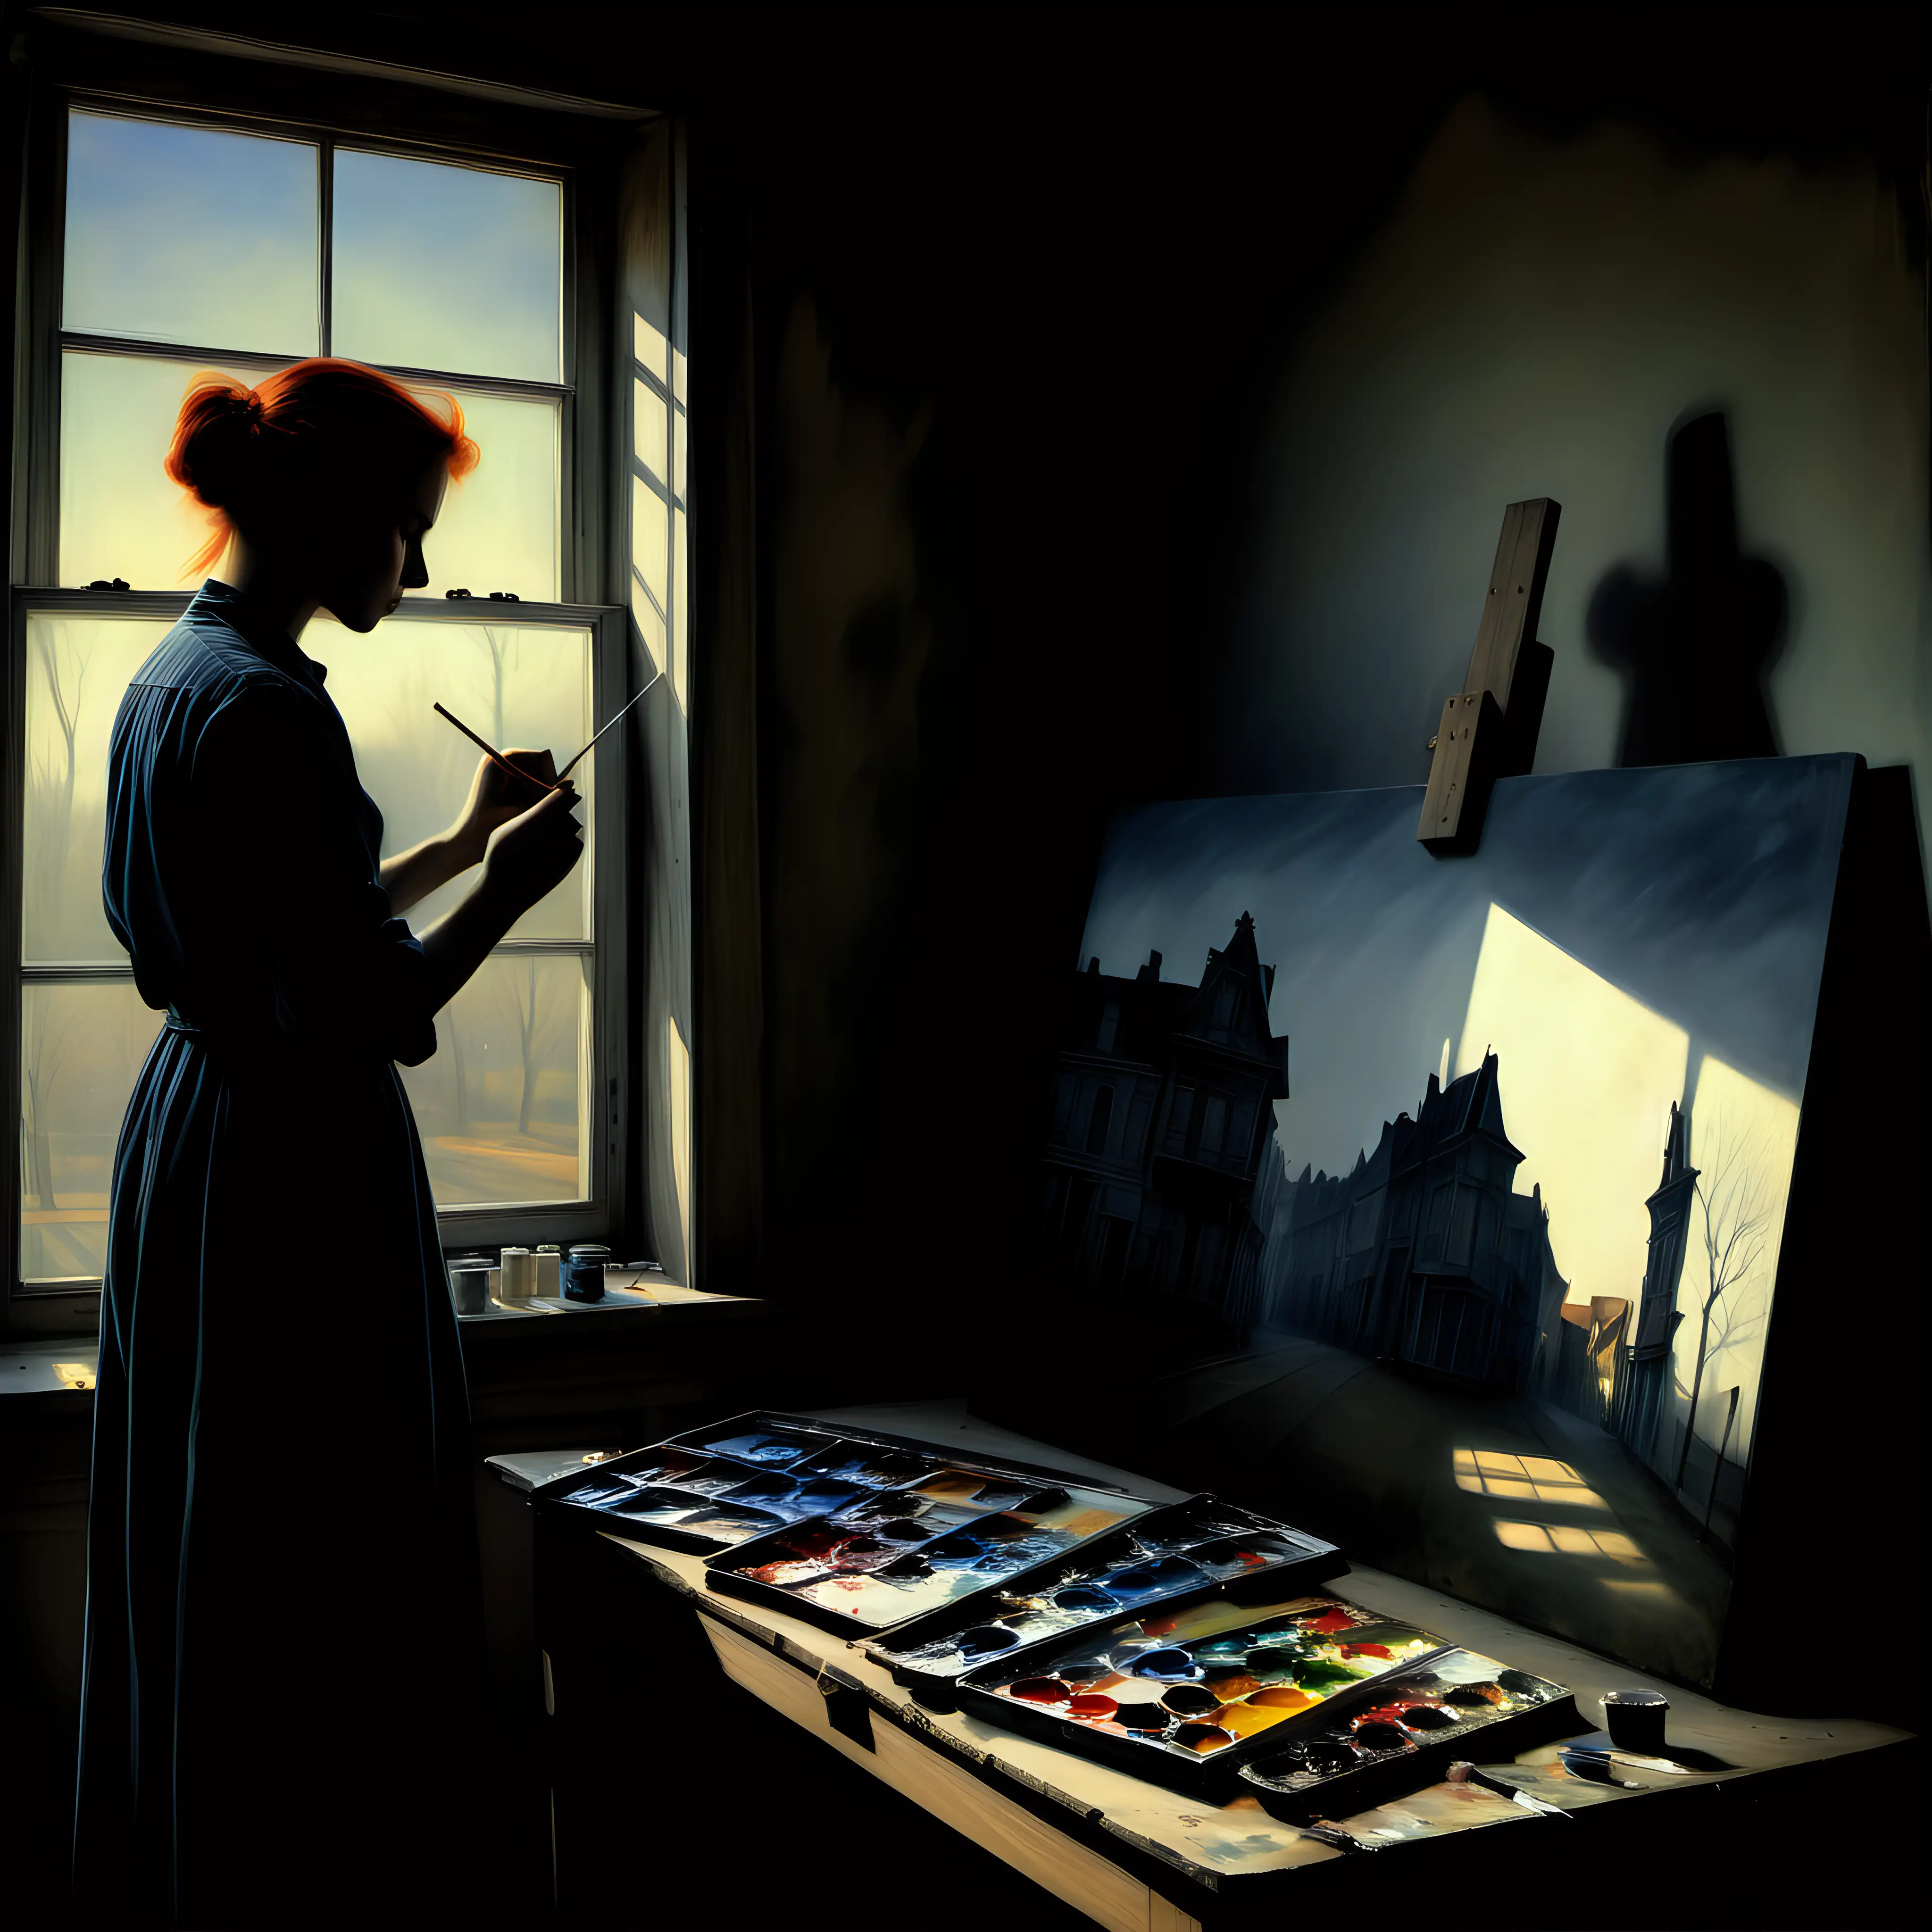 Nostalgic Painter Capturing Inspiration in Shadows